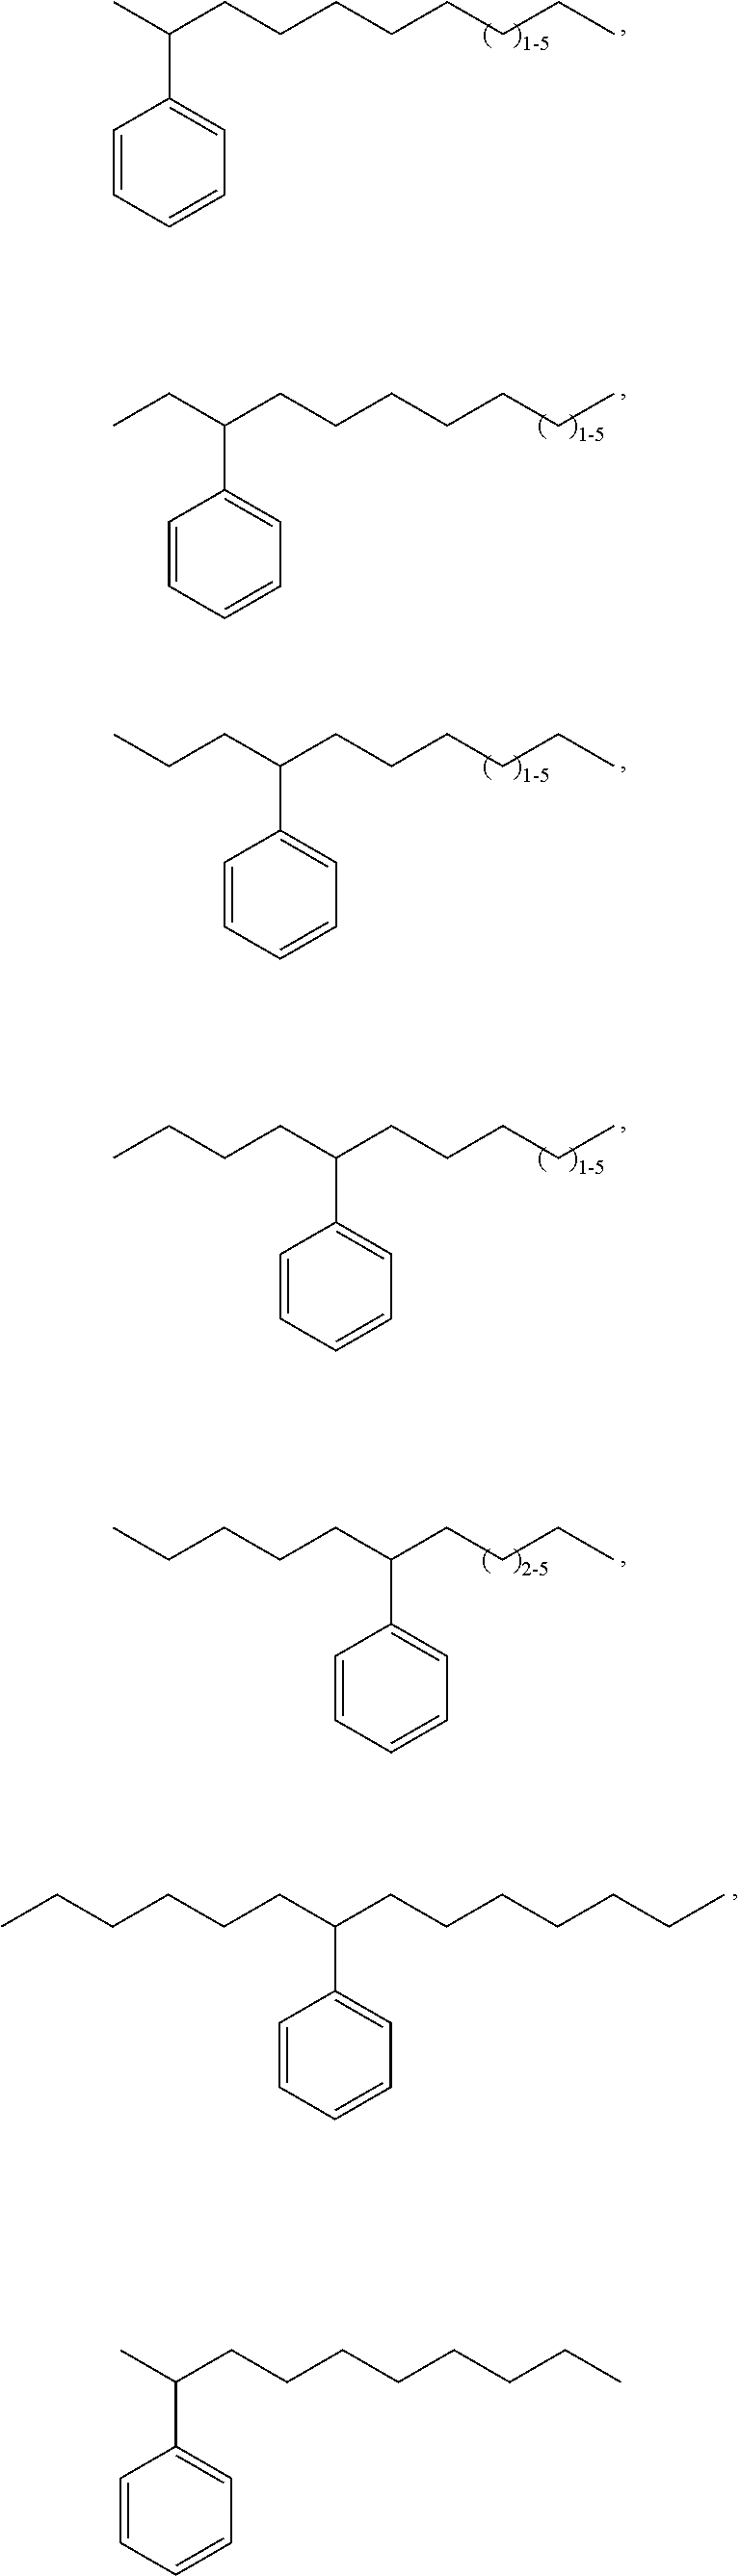 Bio-based linear alkylphenyl sulfonates